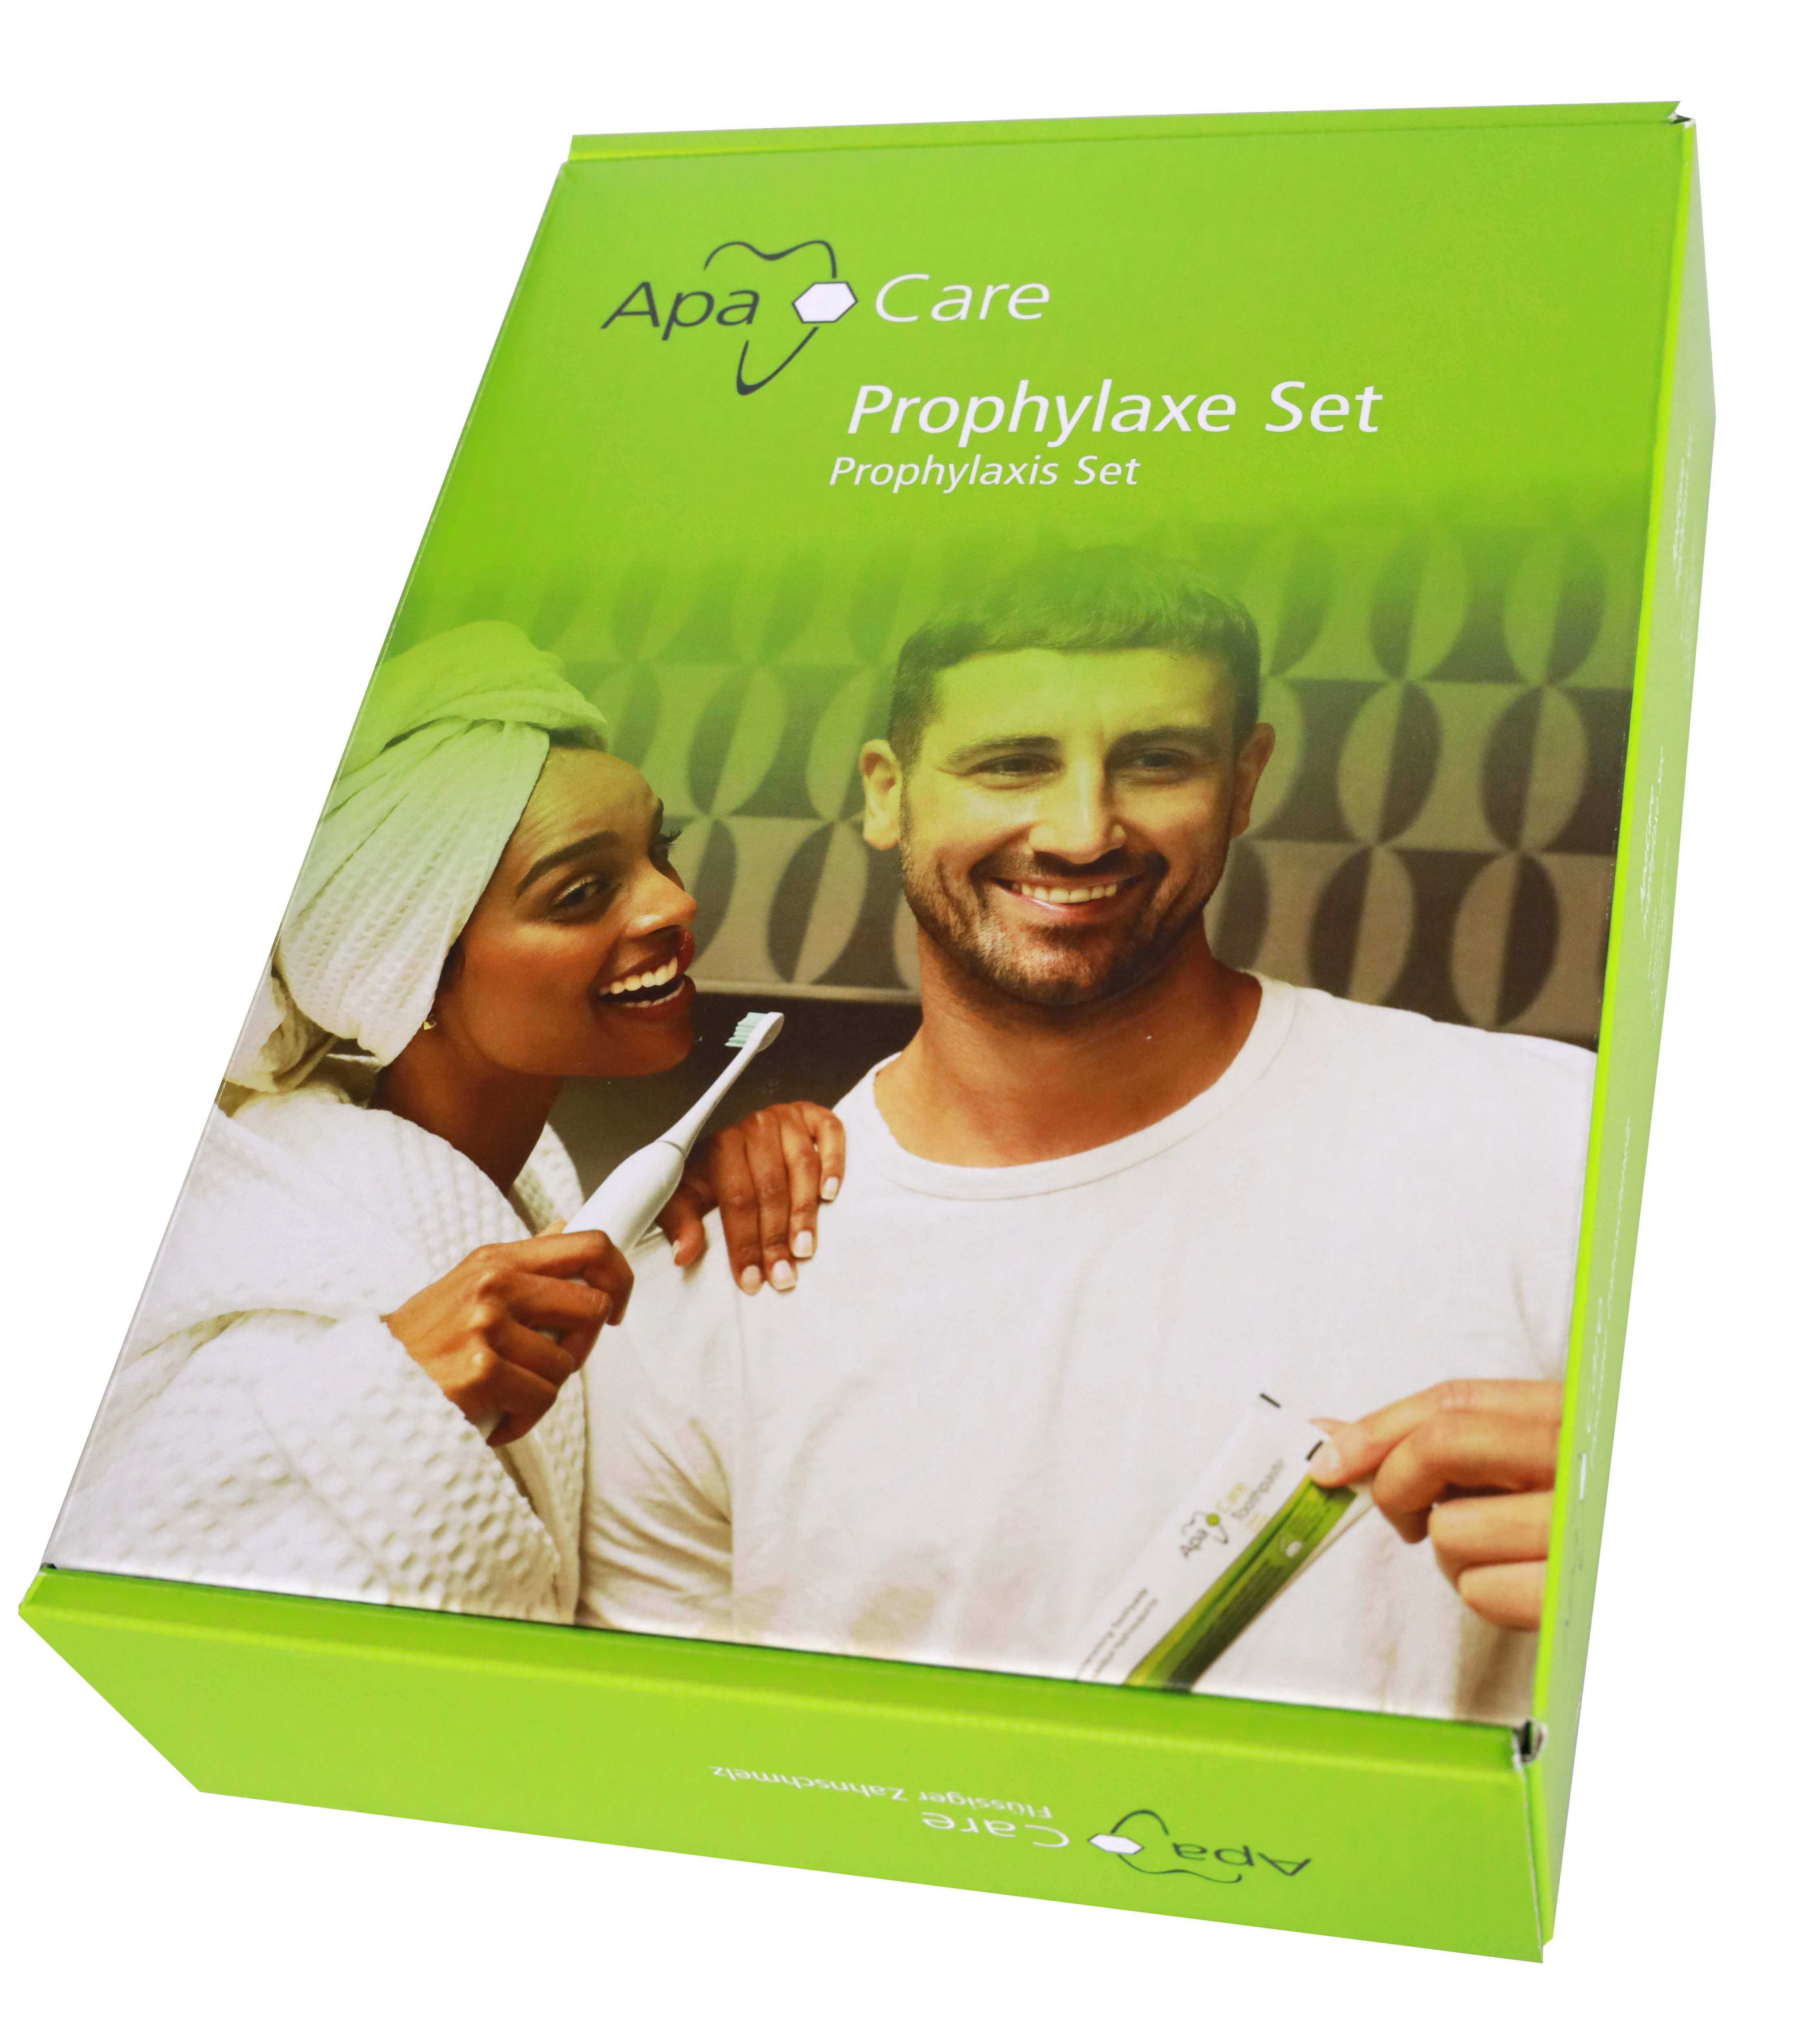  ApaCare Prophylaxis set